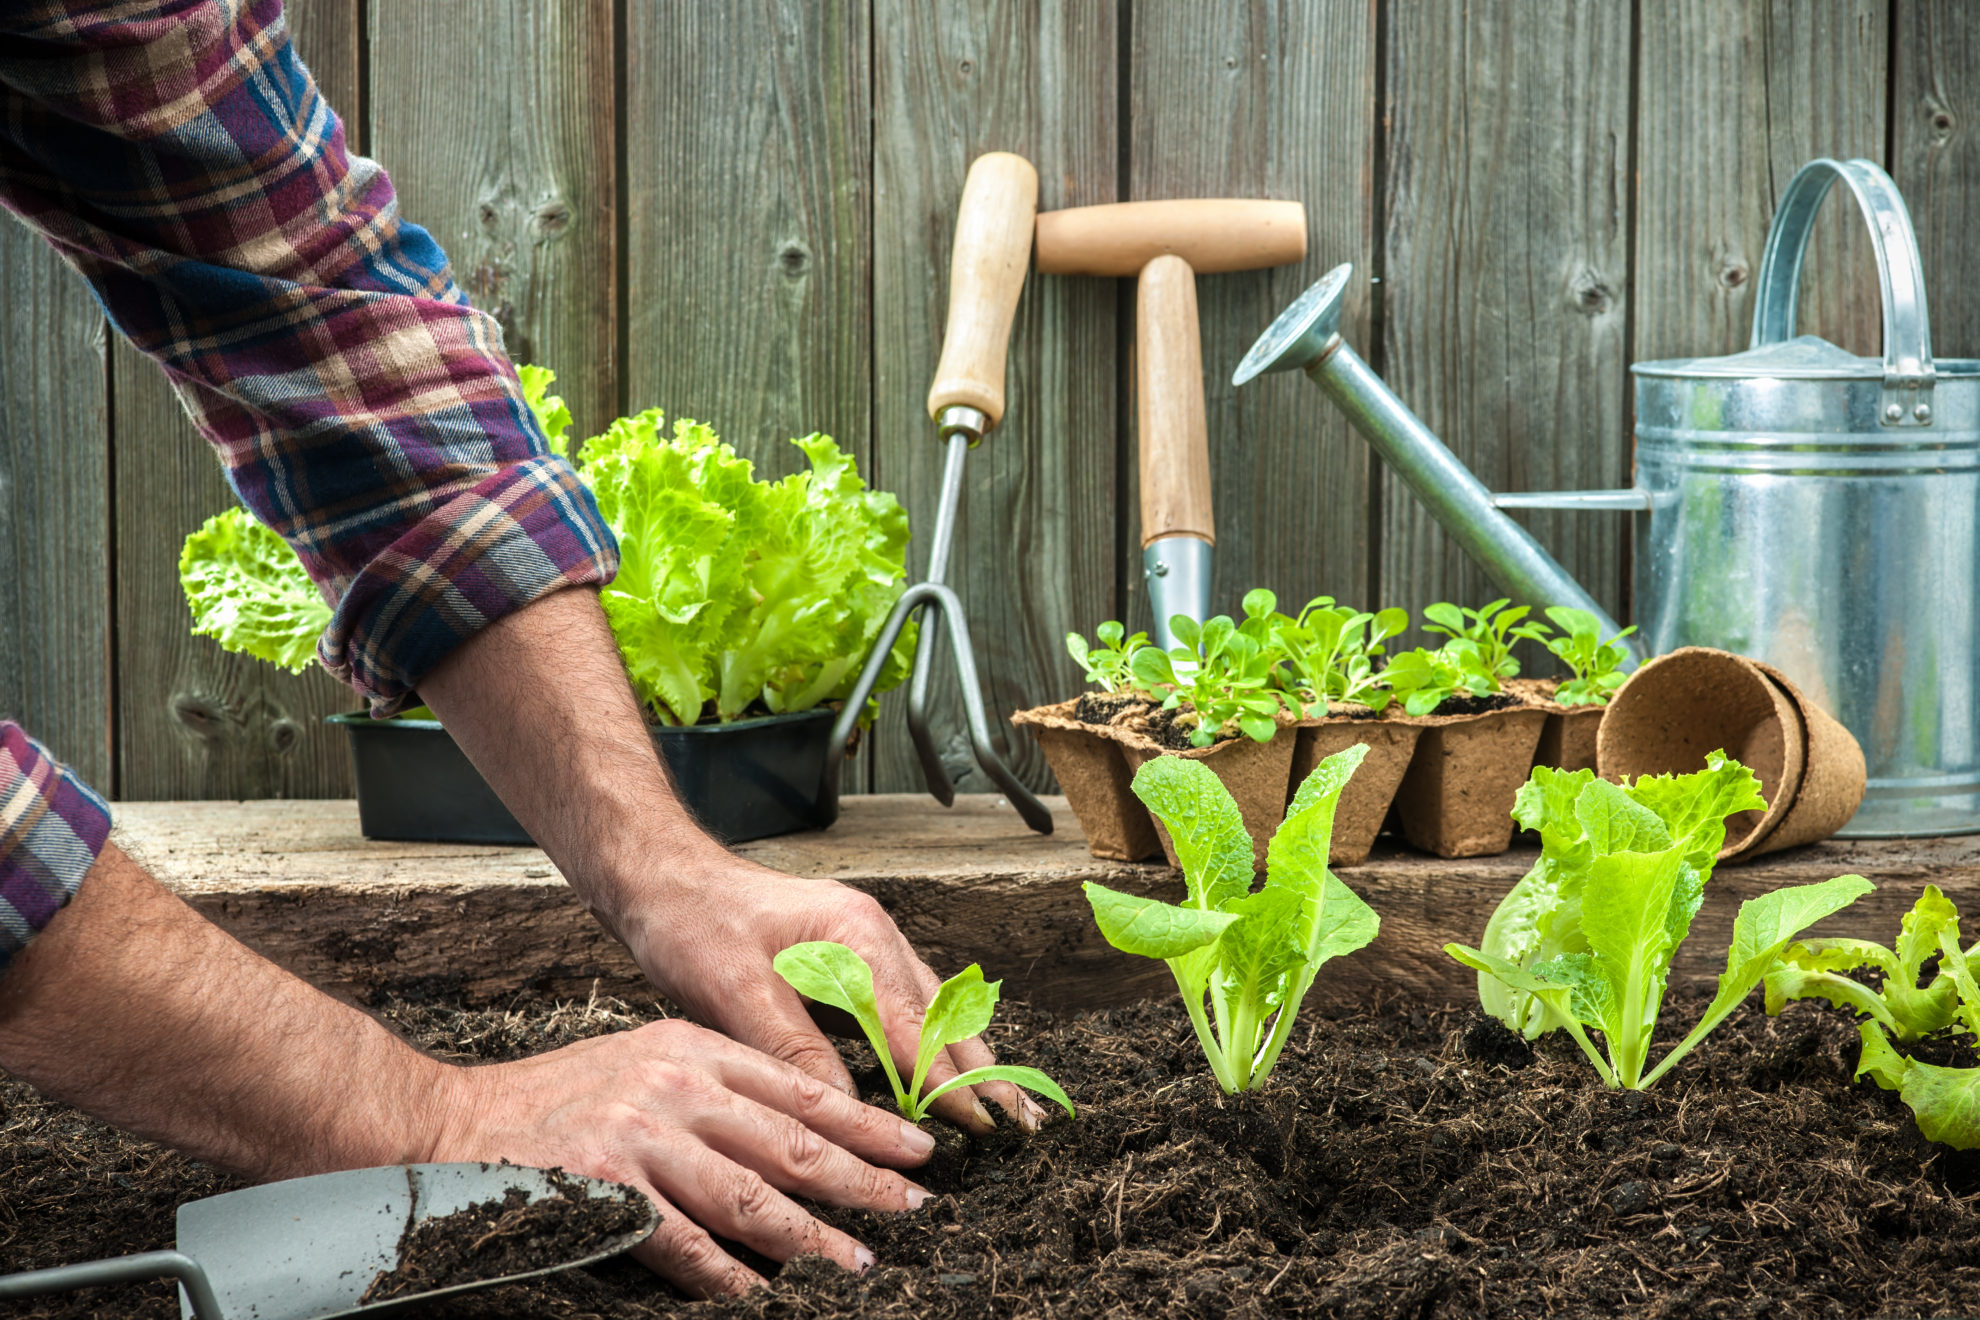 Farmer planting young seedlings of lettuce salad in the vegetable garden